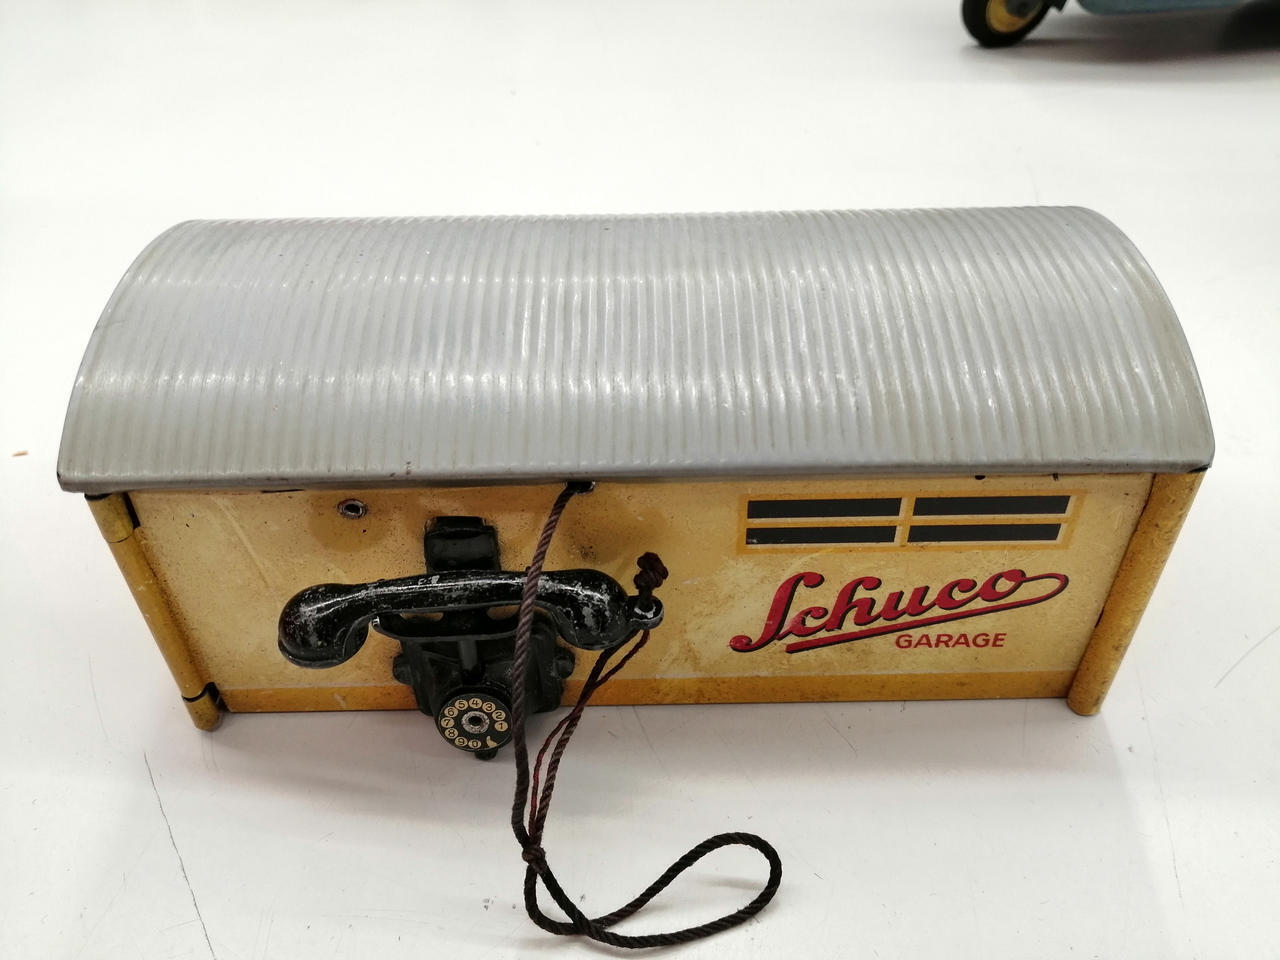 Schuco Tin Car And Garage Vintage